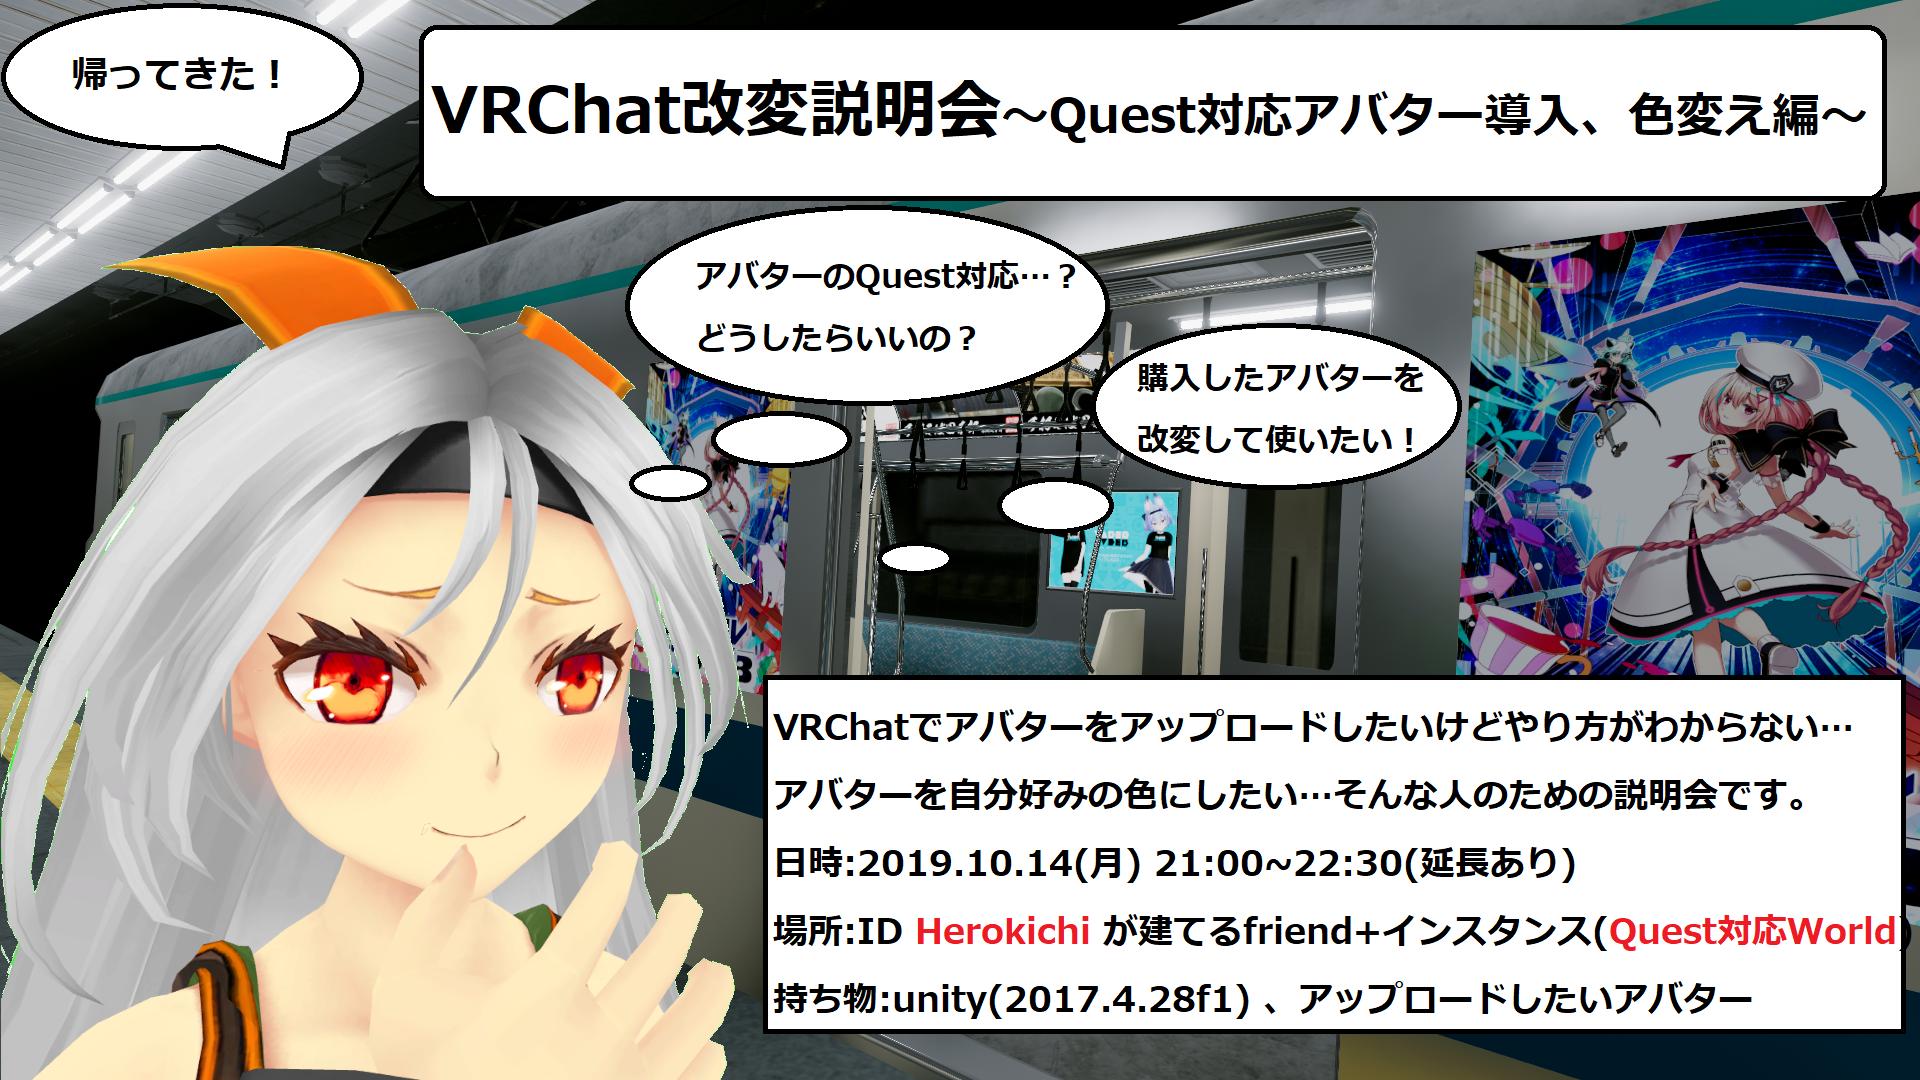 VRChat改変説明会~Quest対応&色変え編~